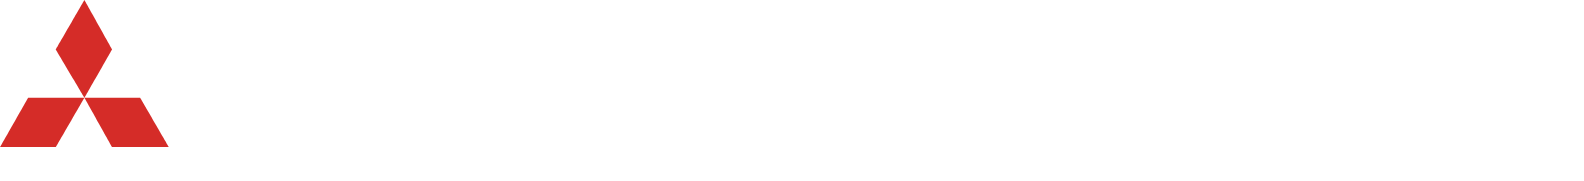 Mitsubishi Corporation logo large for dark backgrounds (transparent PNG)